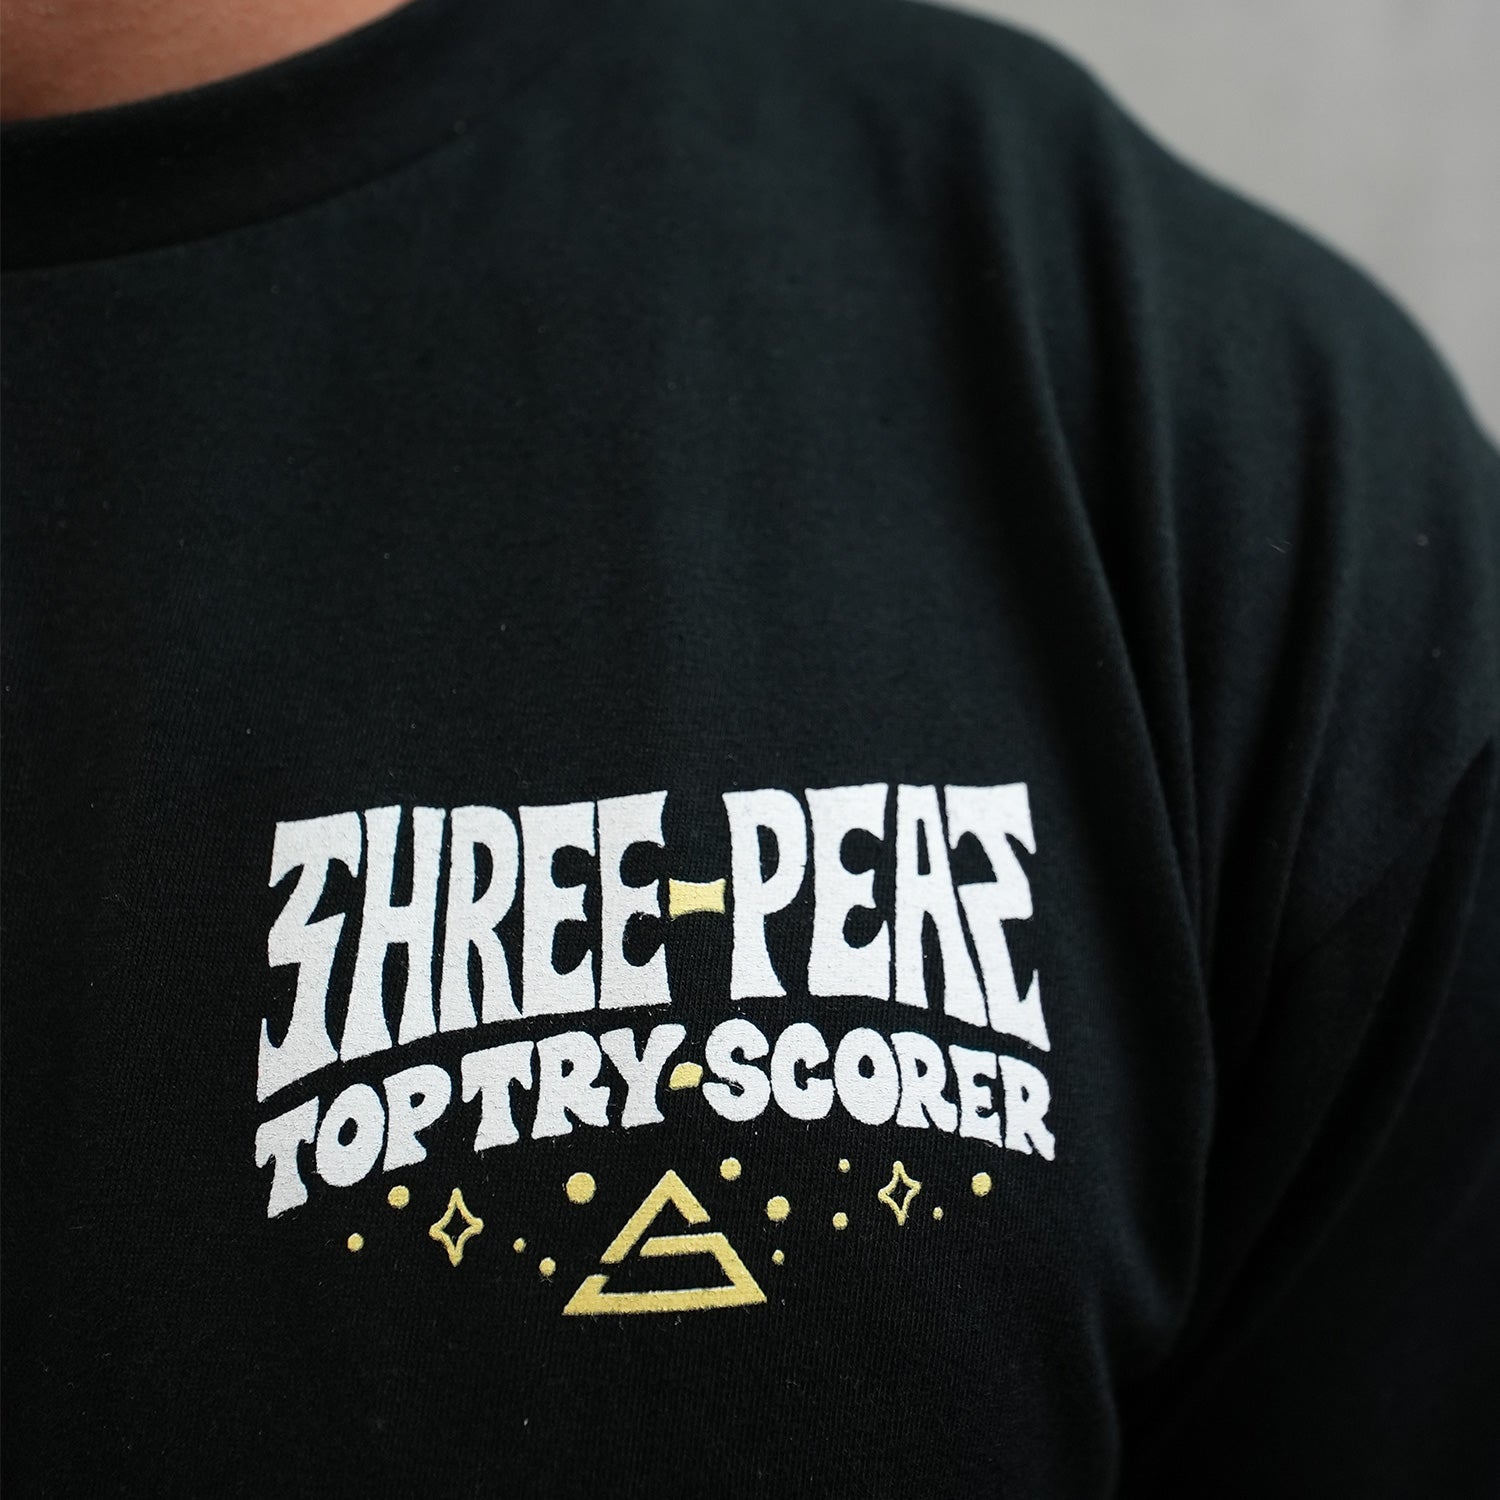 PBC 3-Peat shirts